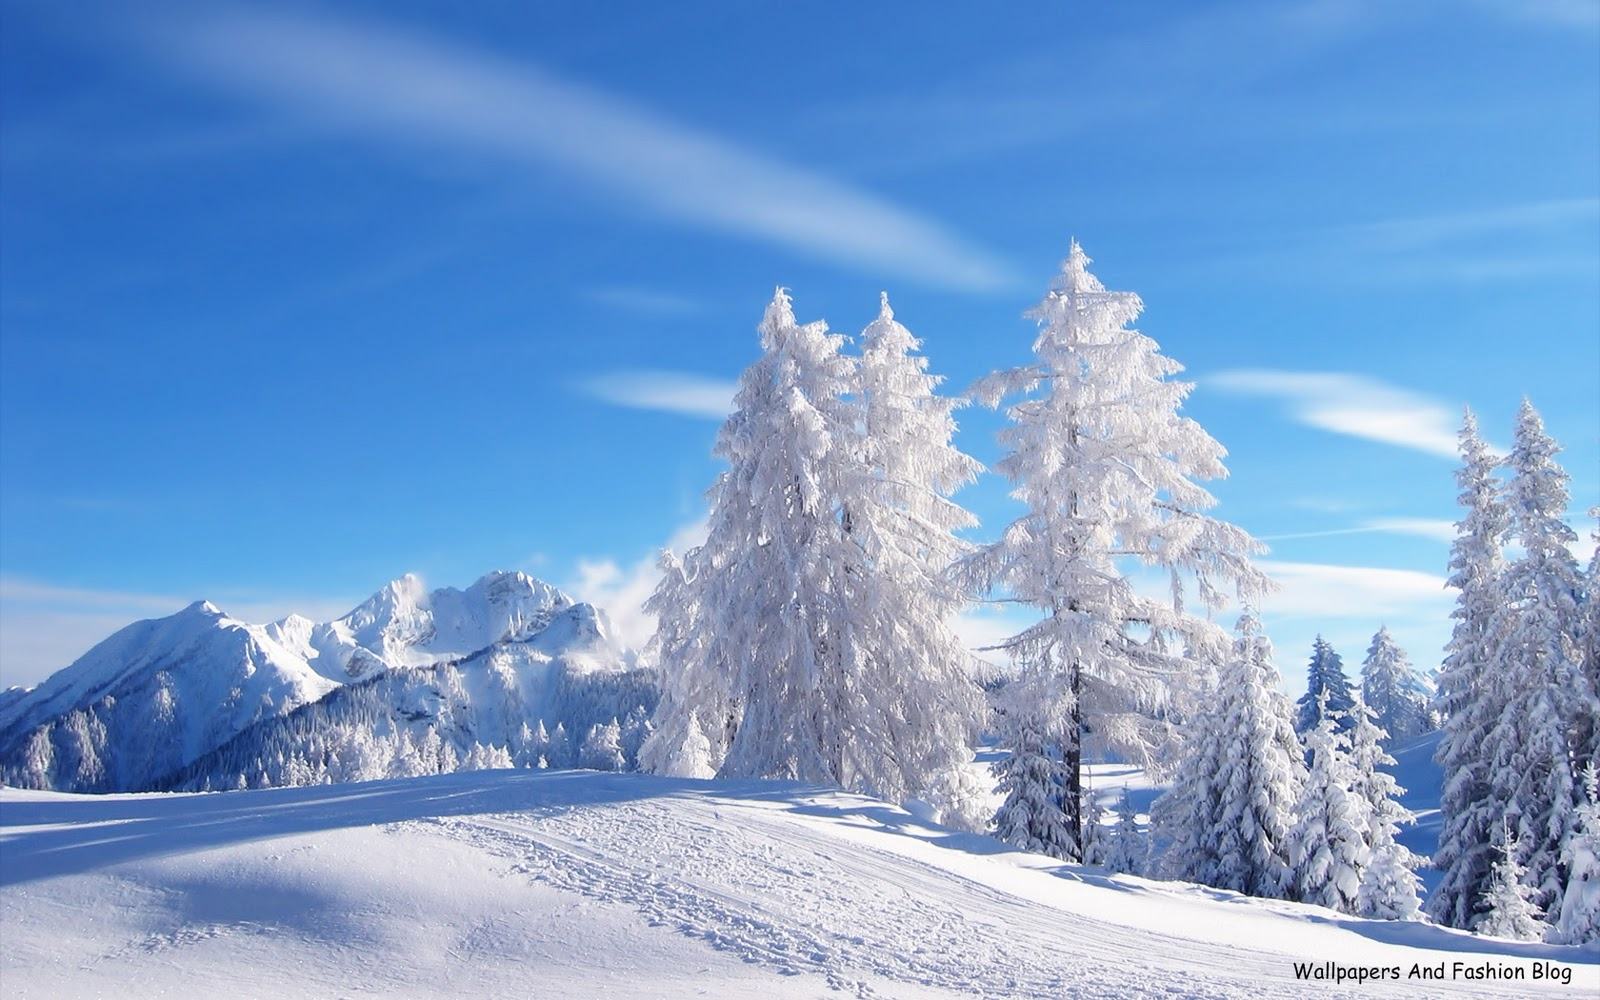 Winter background scenes